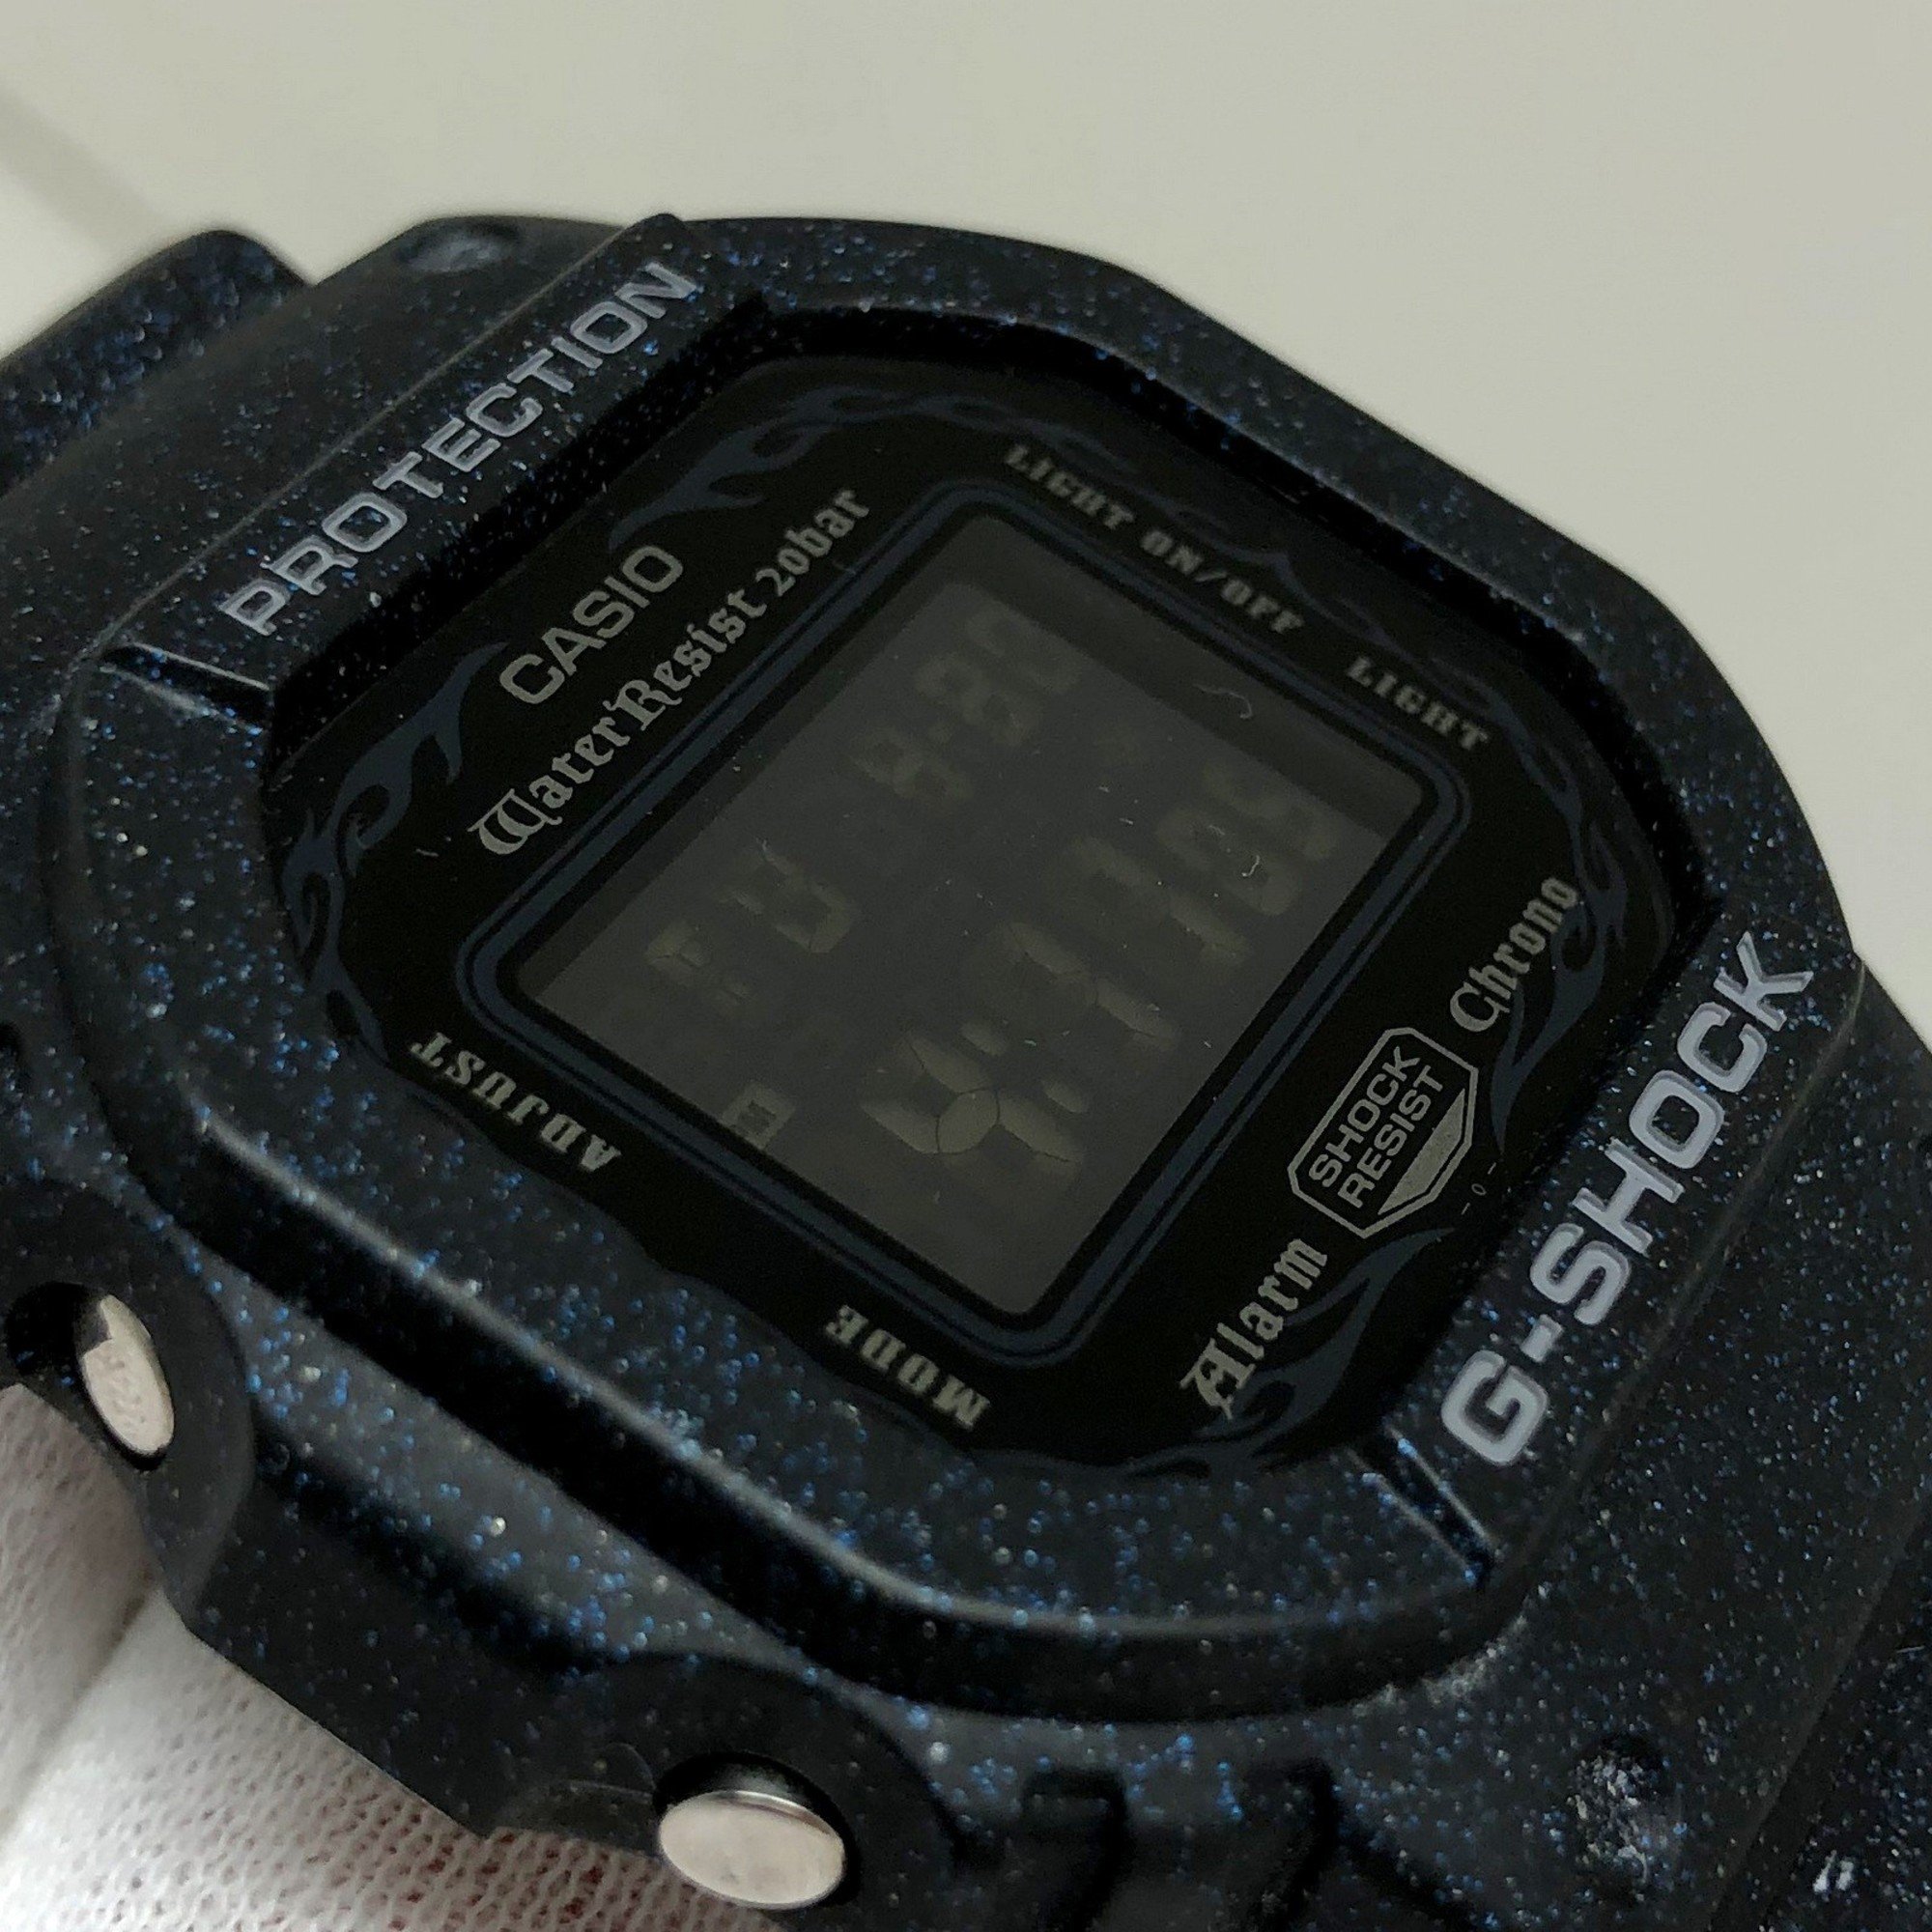 G-SHOCK CASIO Casio Watch DW-5600GM-1 Metallix-G Metallic Foil Black Digital Resin Men's Mikunigaoka Store ITFQ8CLPNFBC